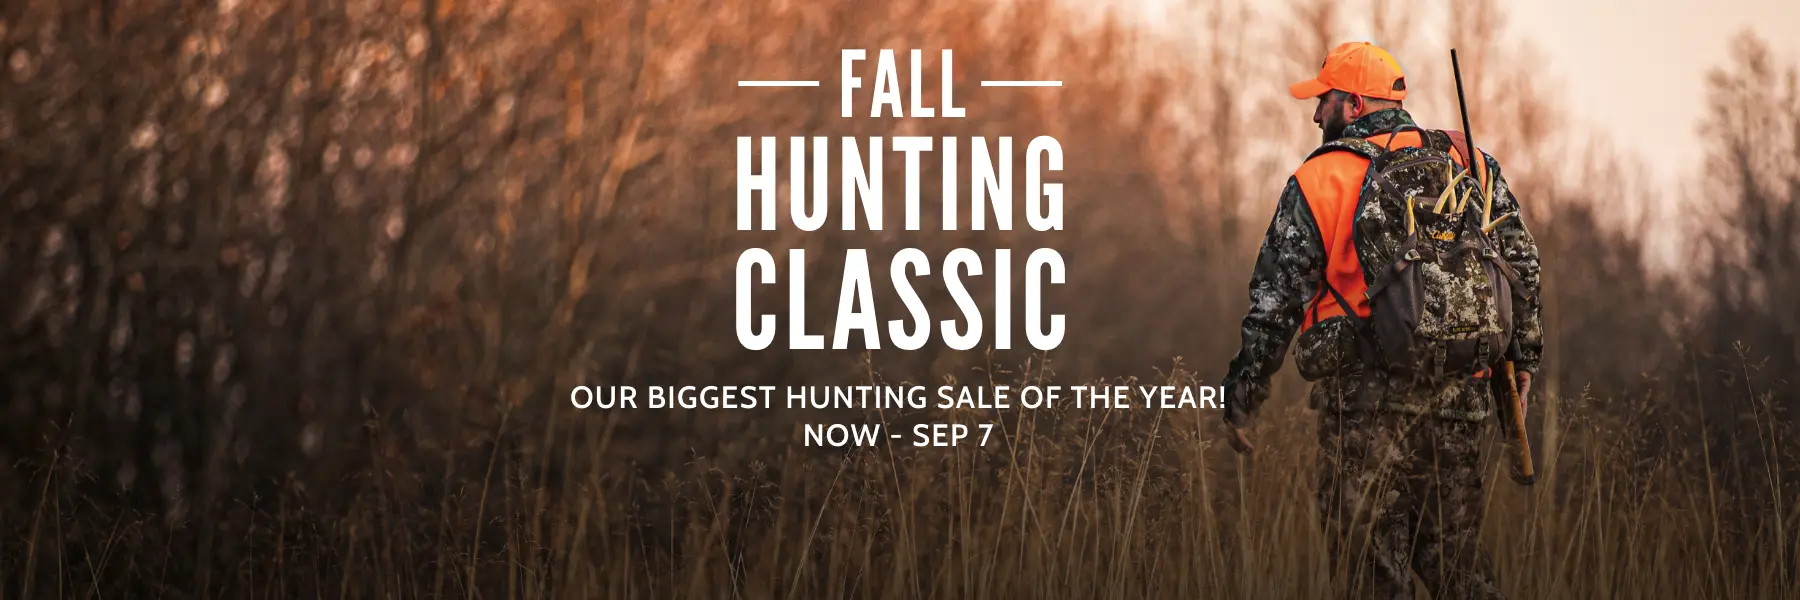 Fall Hunting Classic